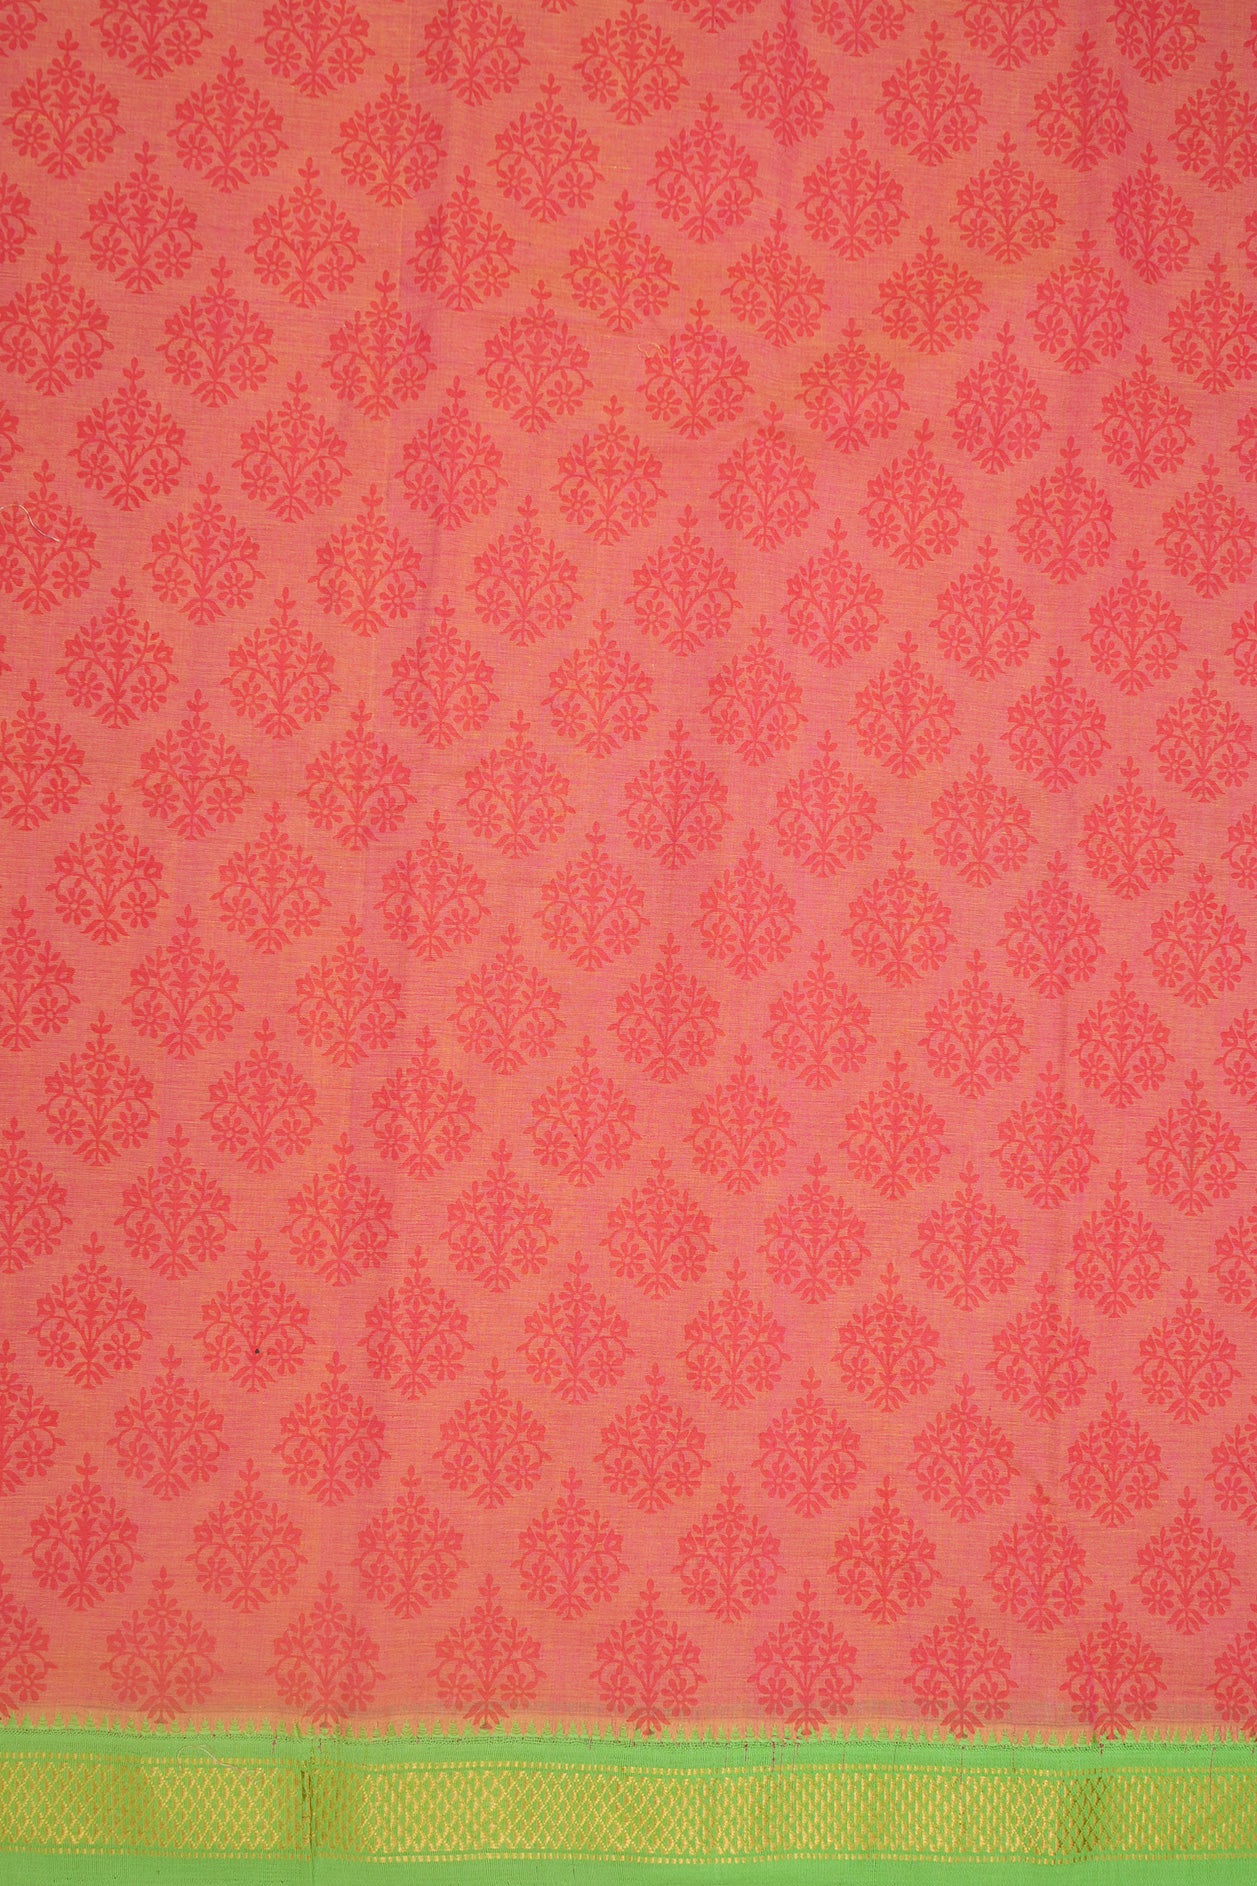 Printed Floral Buttas Coral Pink Mangalagiri Cotton Saree